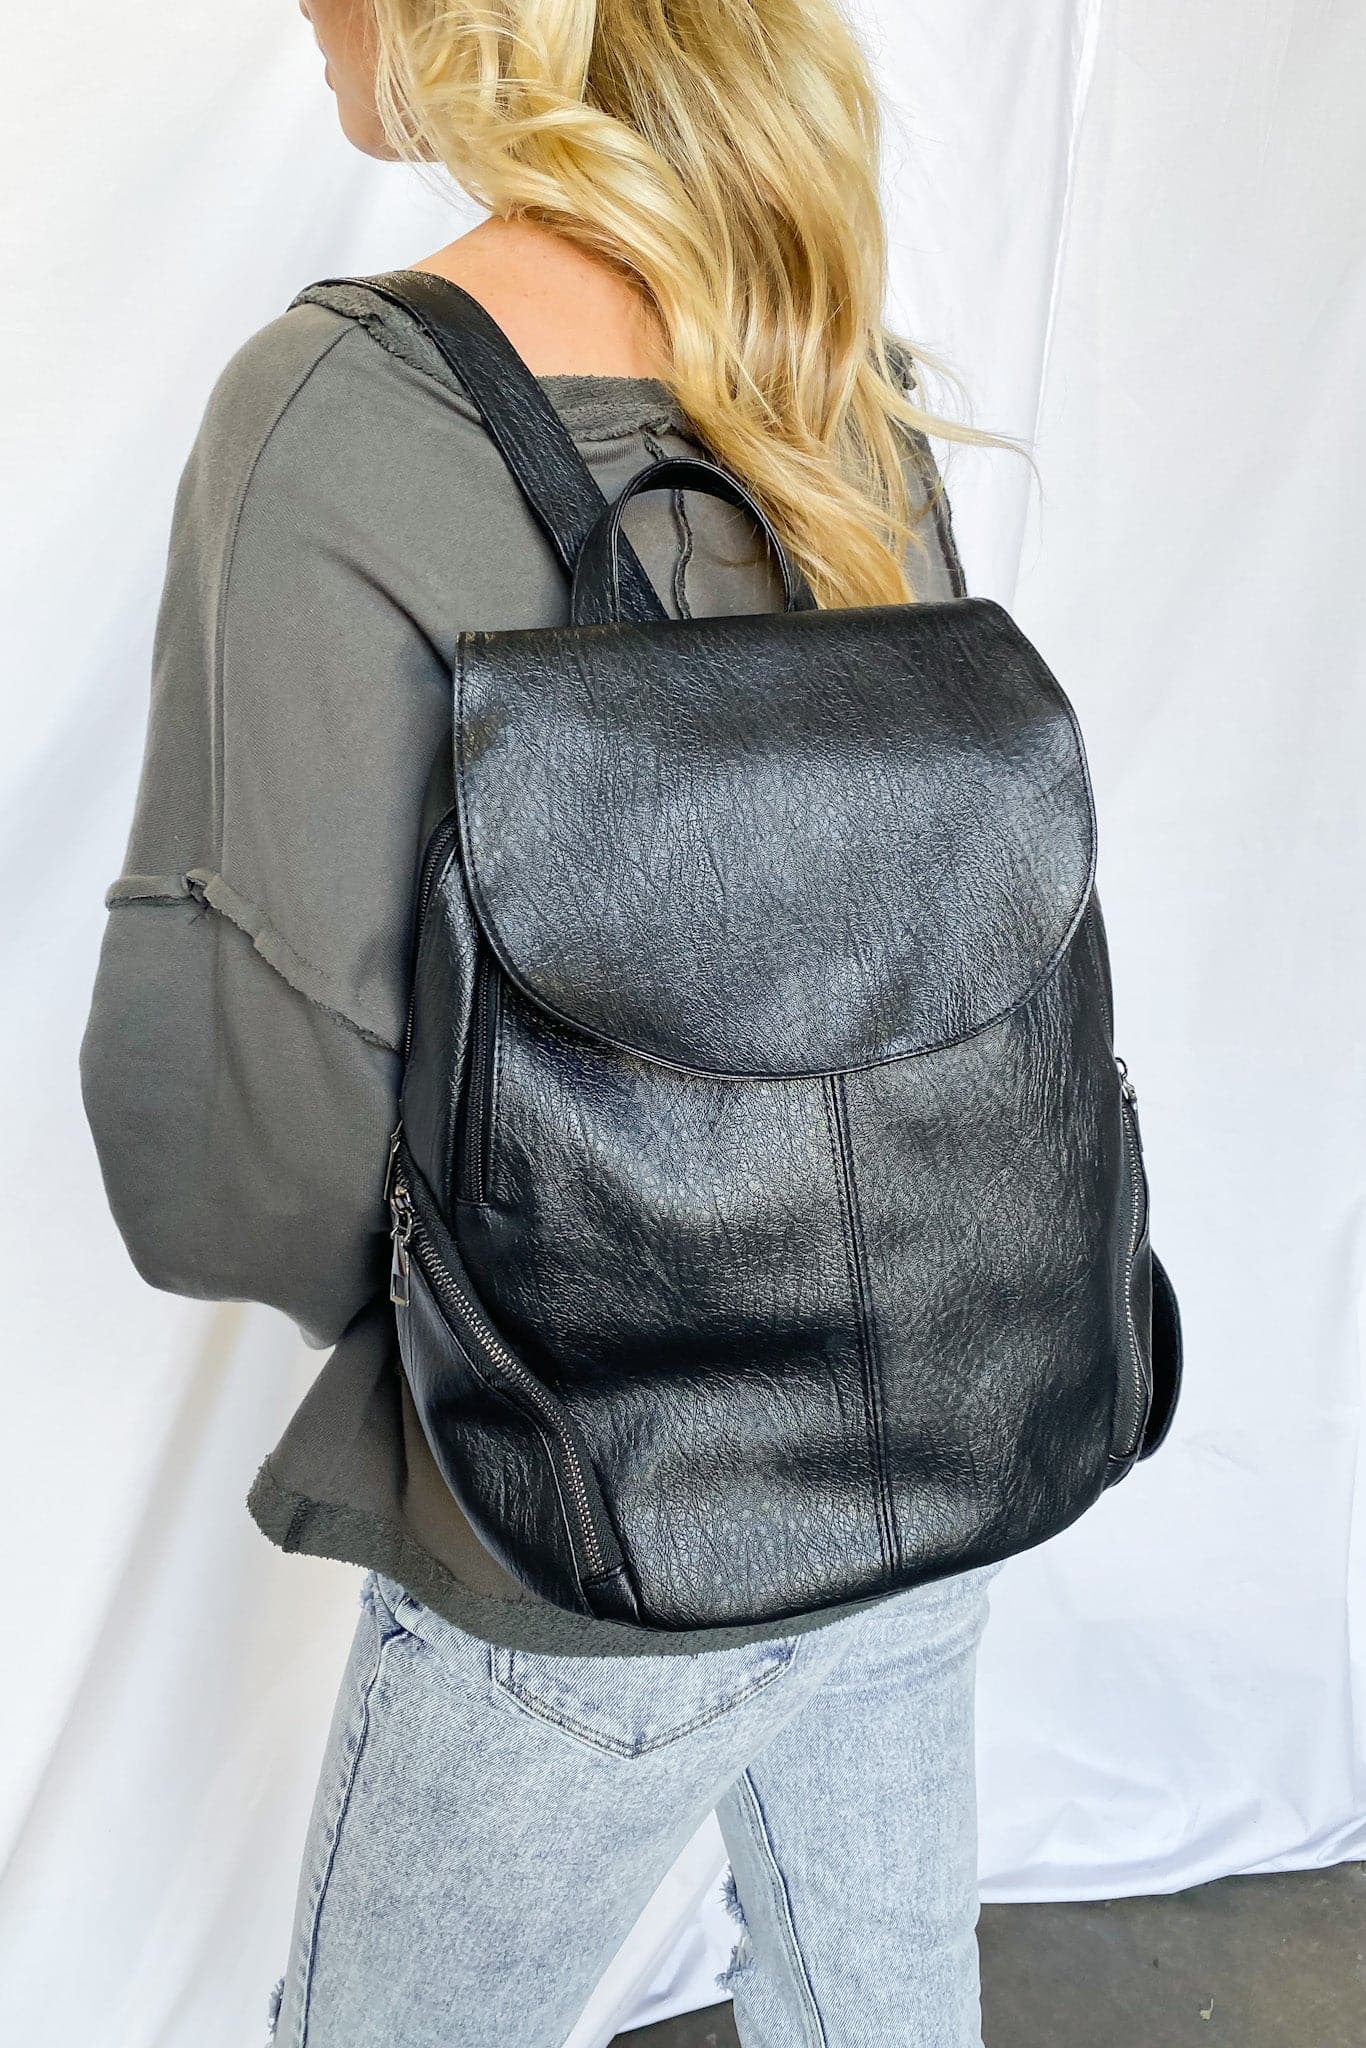  Class Dismissed Vegan Leather Backpack - kitchencabinetmagic